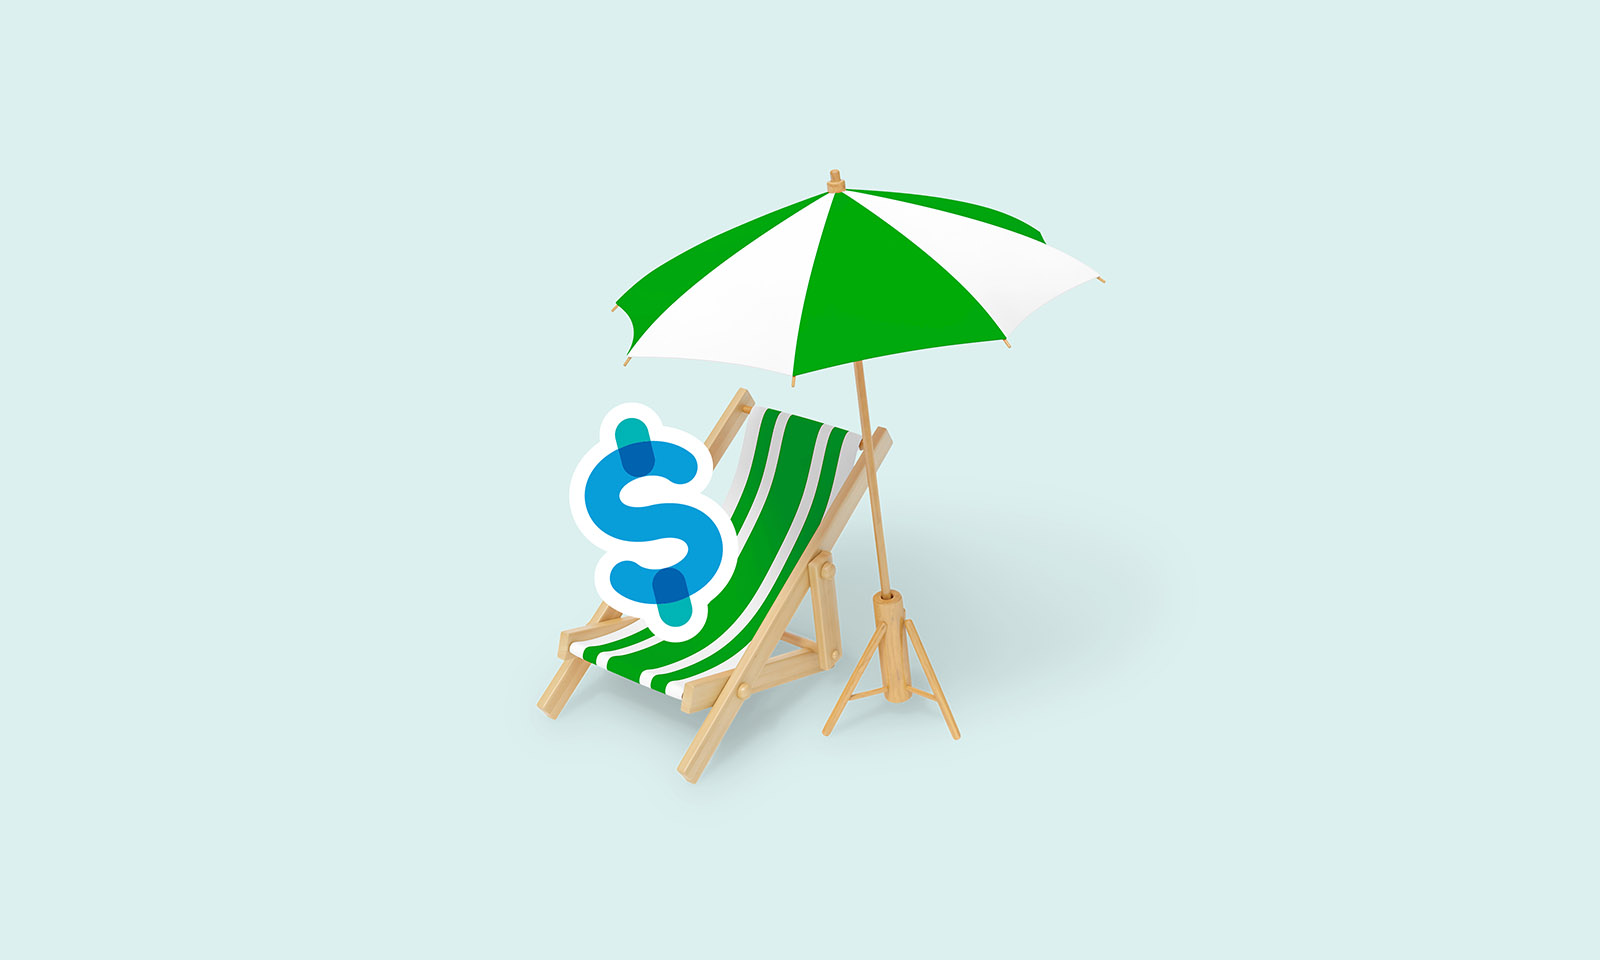 A blue dollar symbol on a green and white beach umbrella